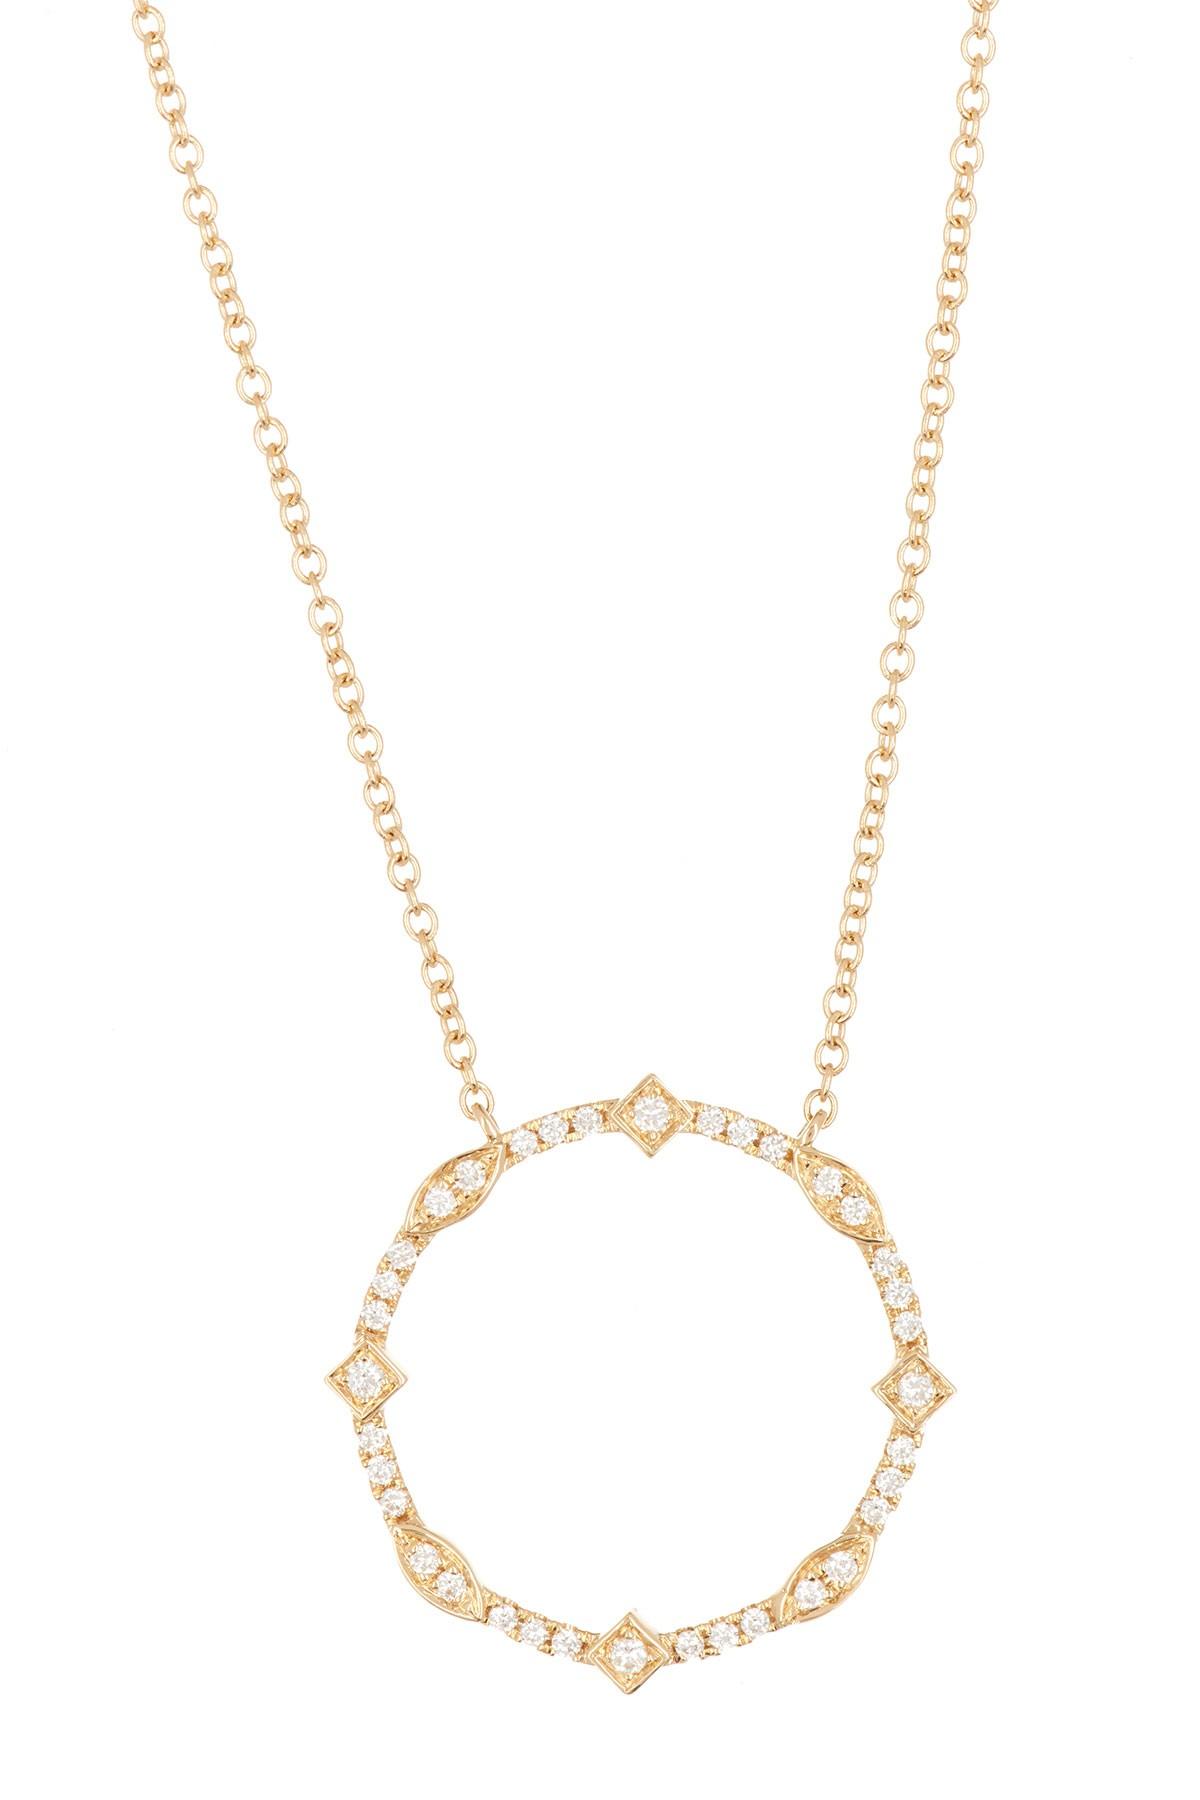 Lyst - Bony Levy 18k Gold Circle Diamond Pendant Necklace - 0.16 Ctw in ...